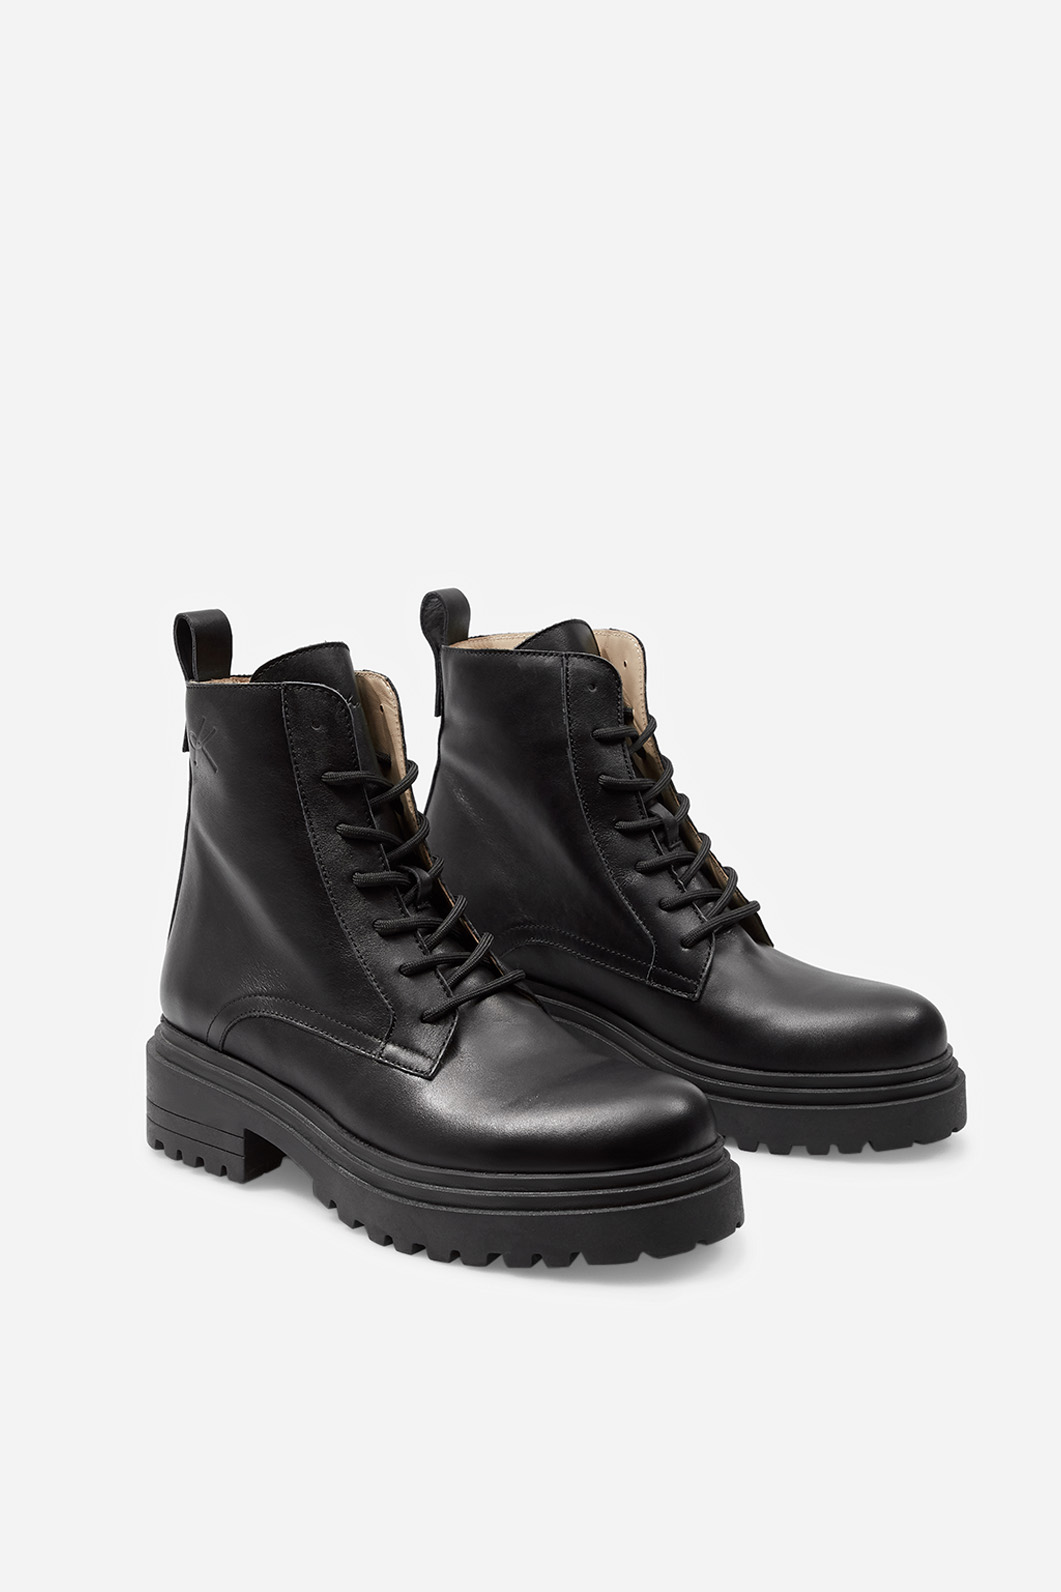 Riri black leather
boots /fur/